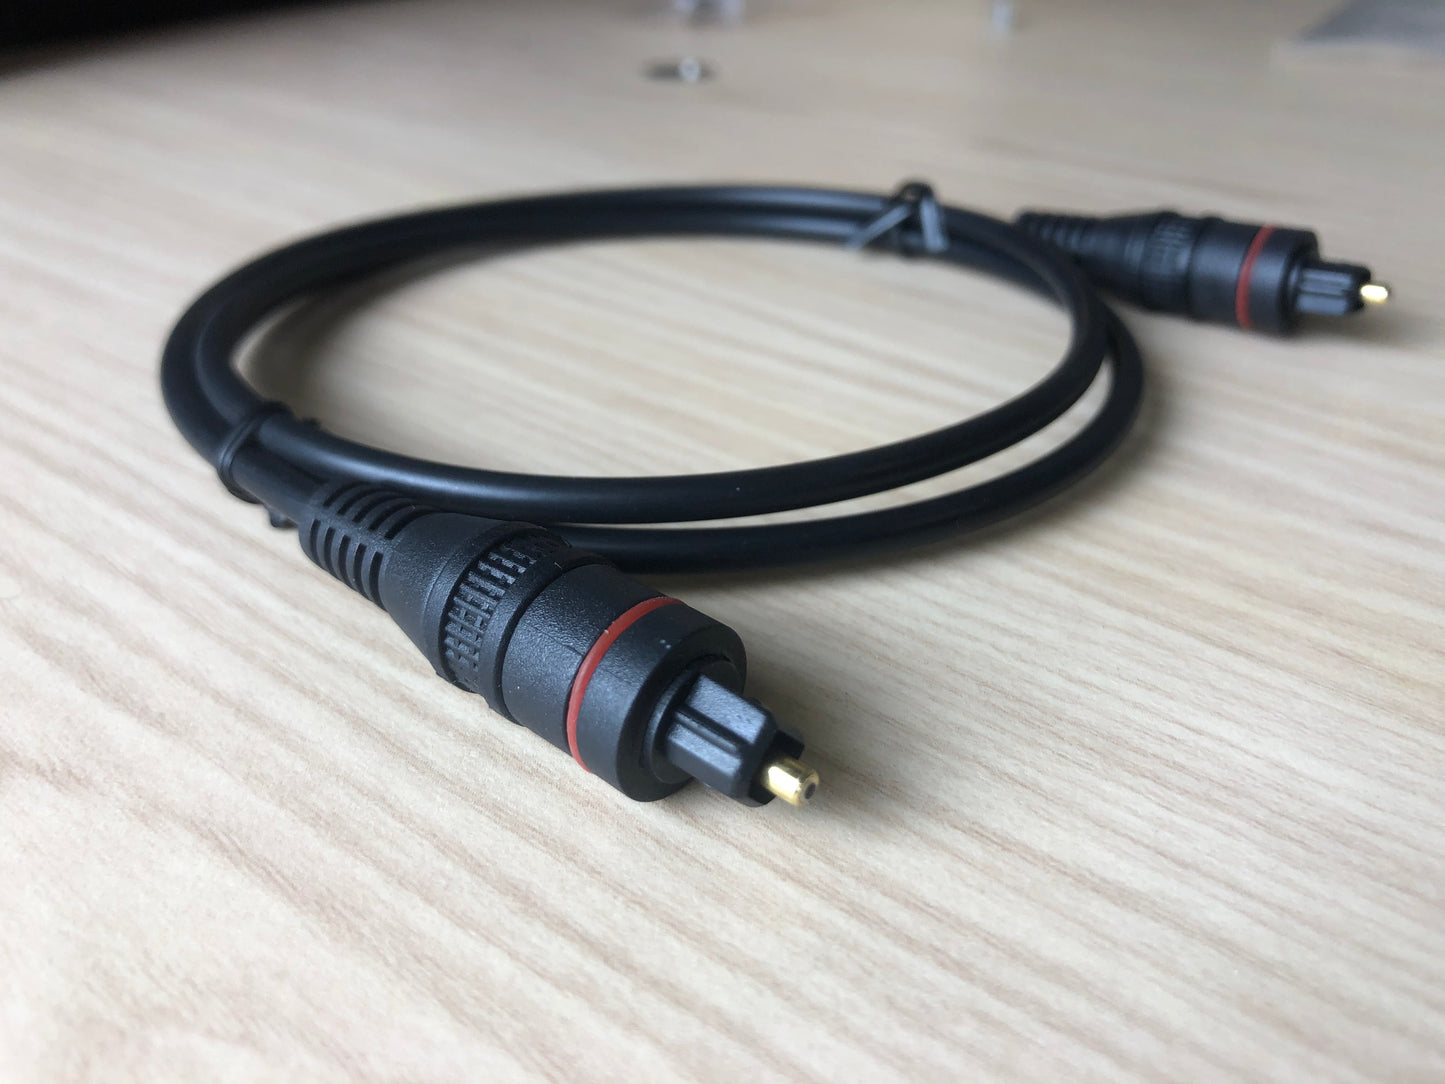 Toslink Optical Cables | Digital Audio SPDIF |3 6 10 15 ft | Canada